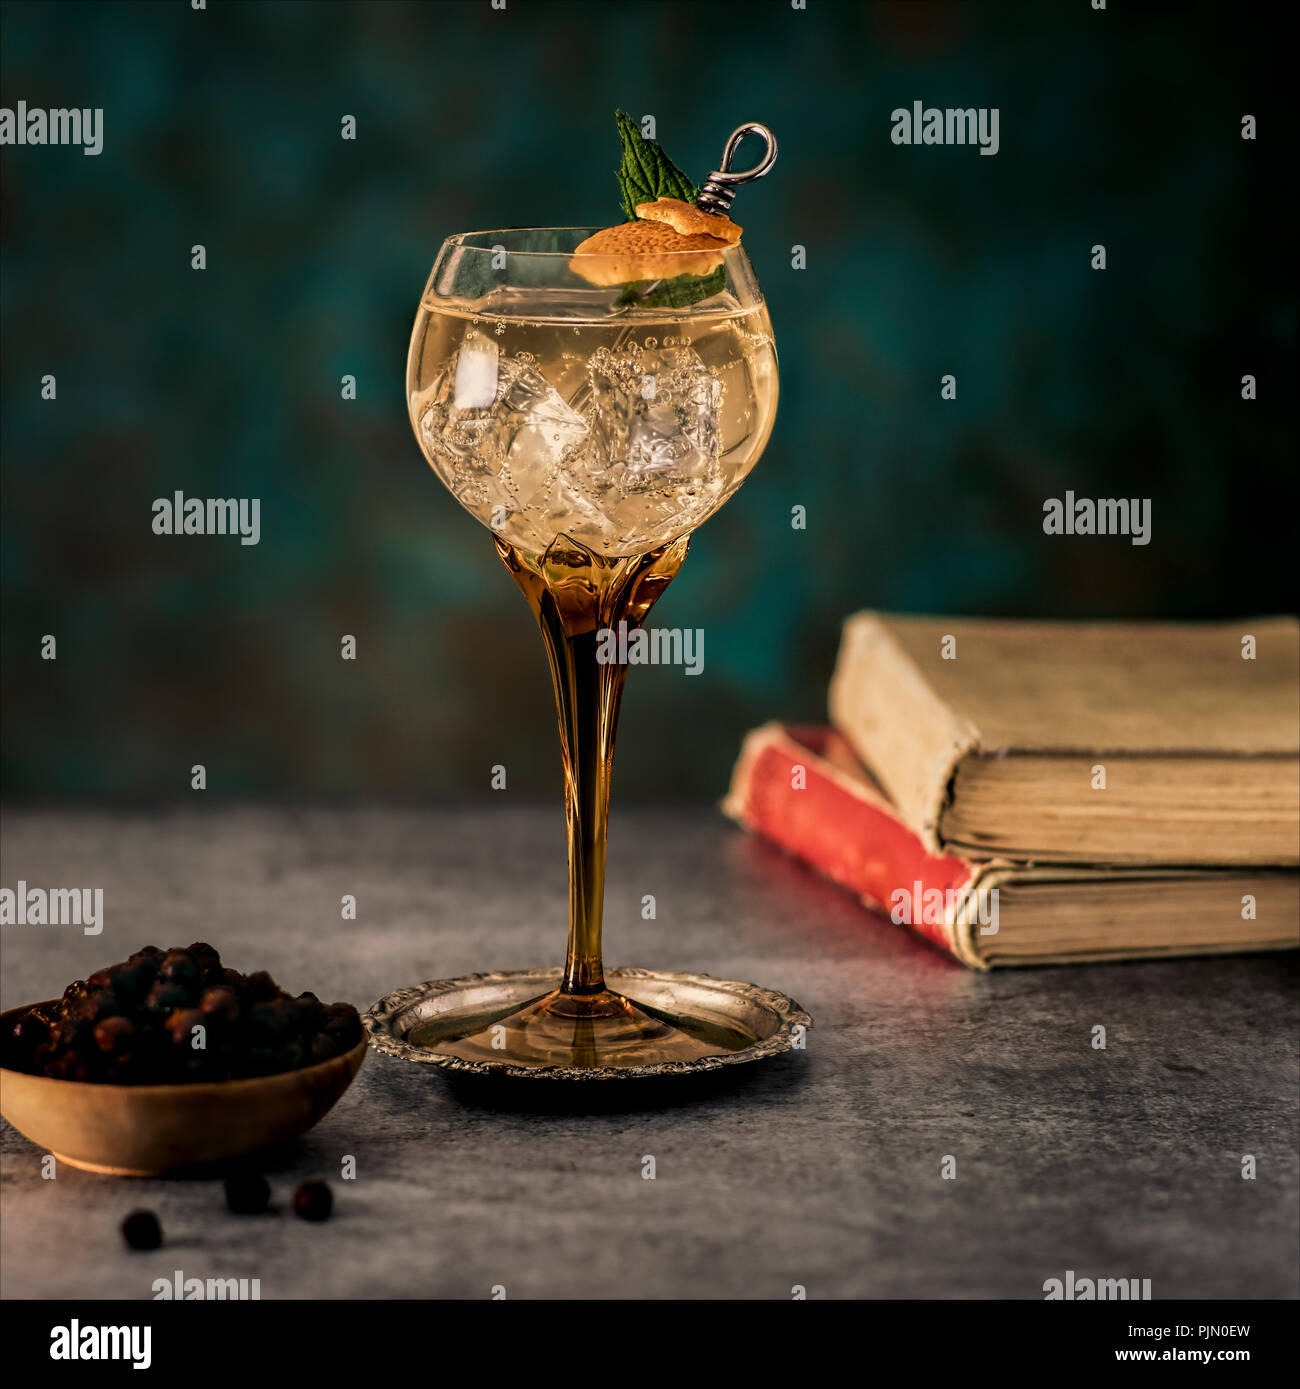 Flor de Sevilla Spritz cocktail gin based drink with orange peel garnish  Stock Photo - Alamy